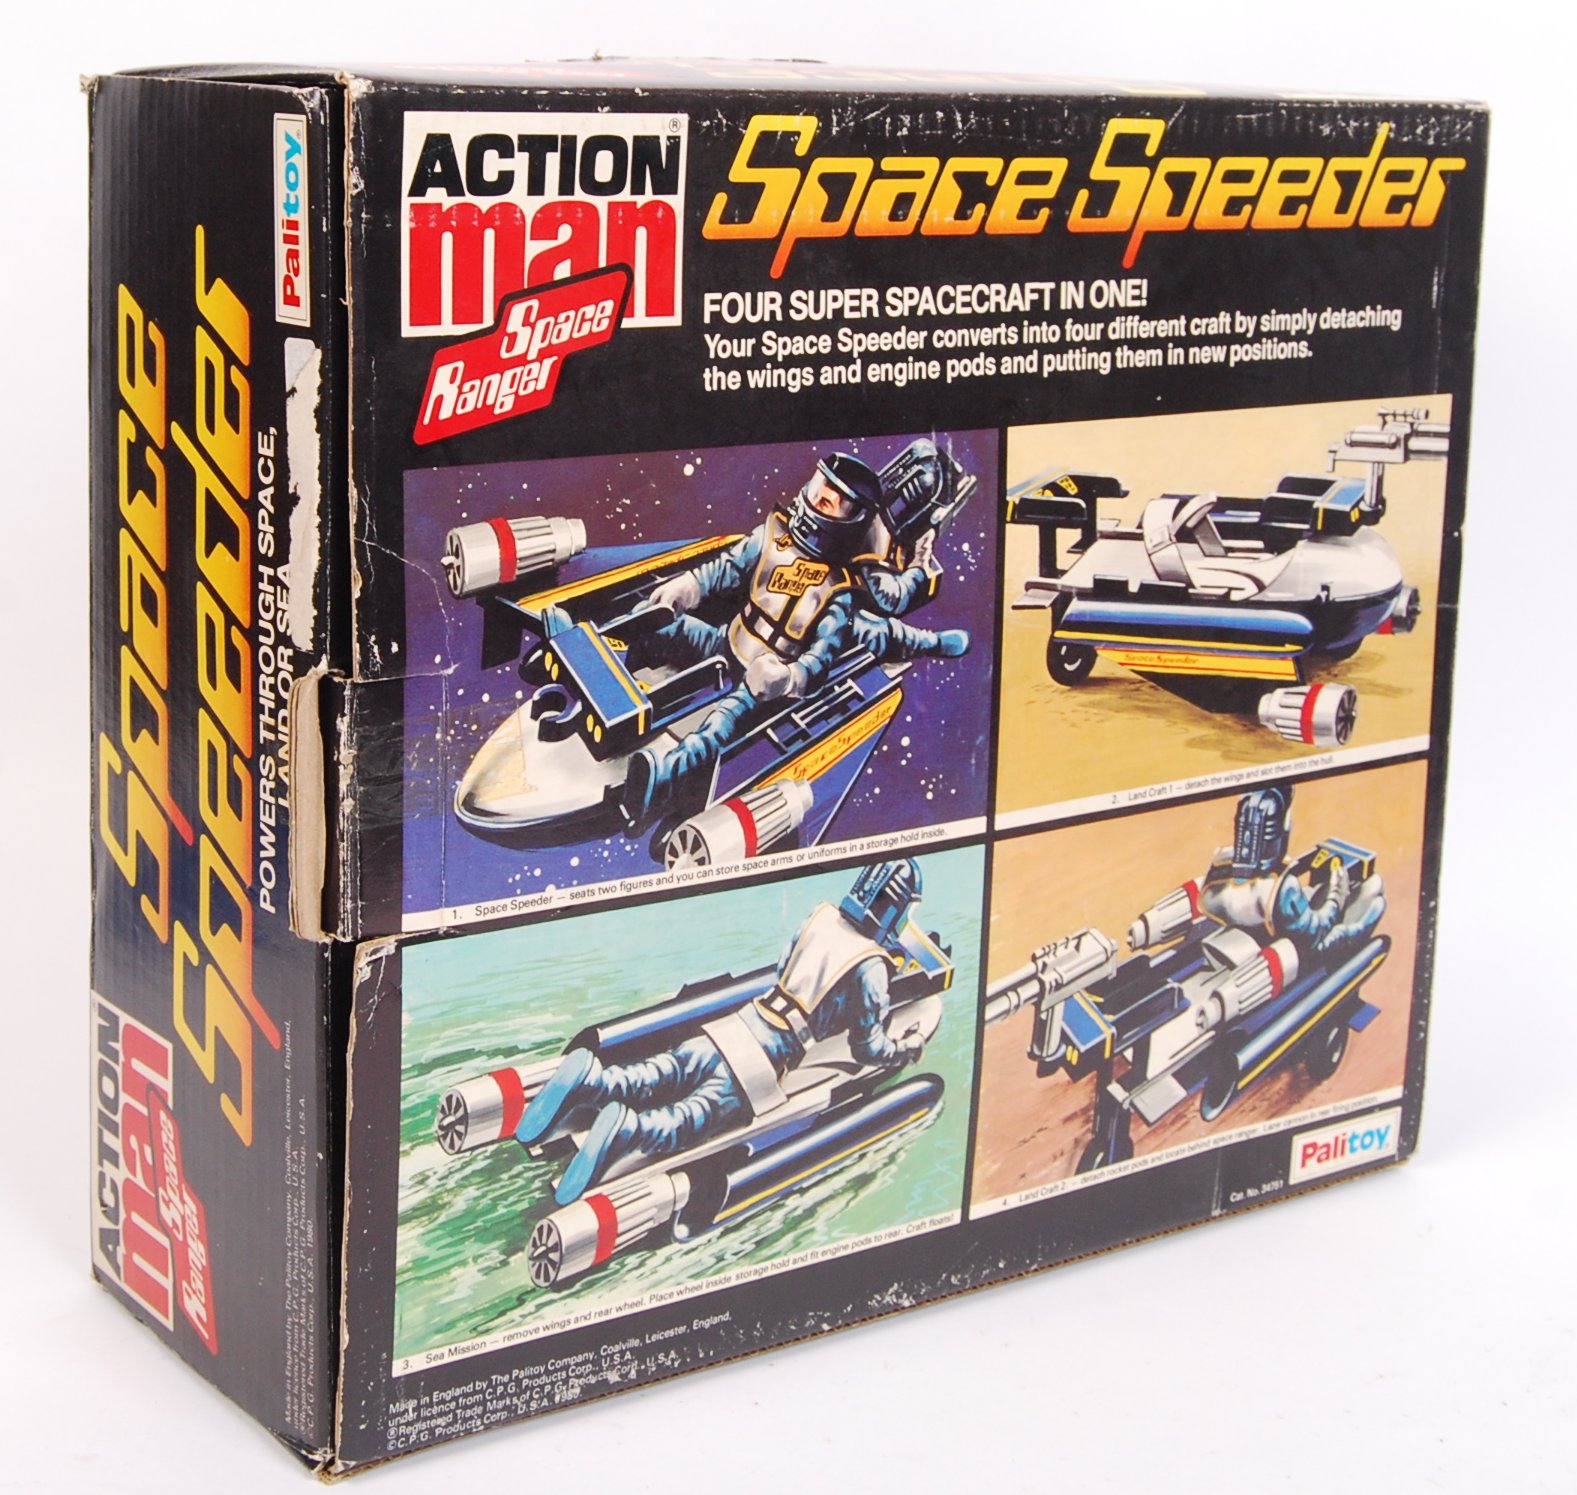 ACTION MAN SPACE SPEEDER - Image 4 of 4